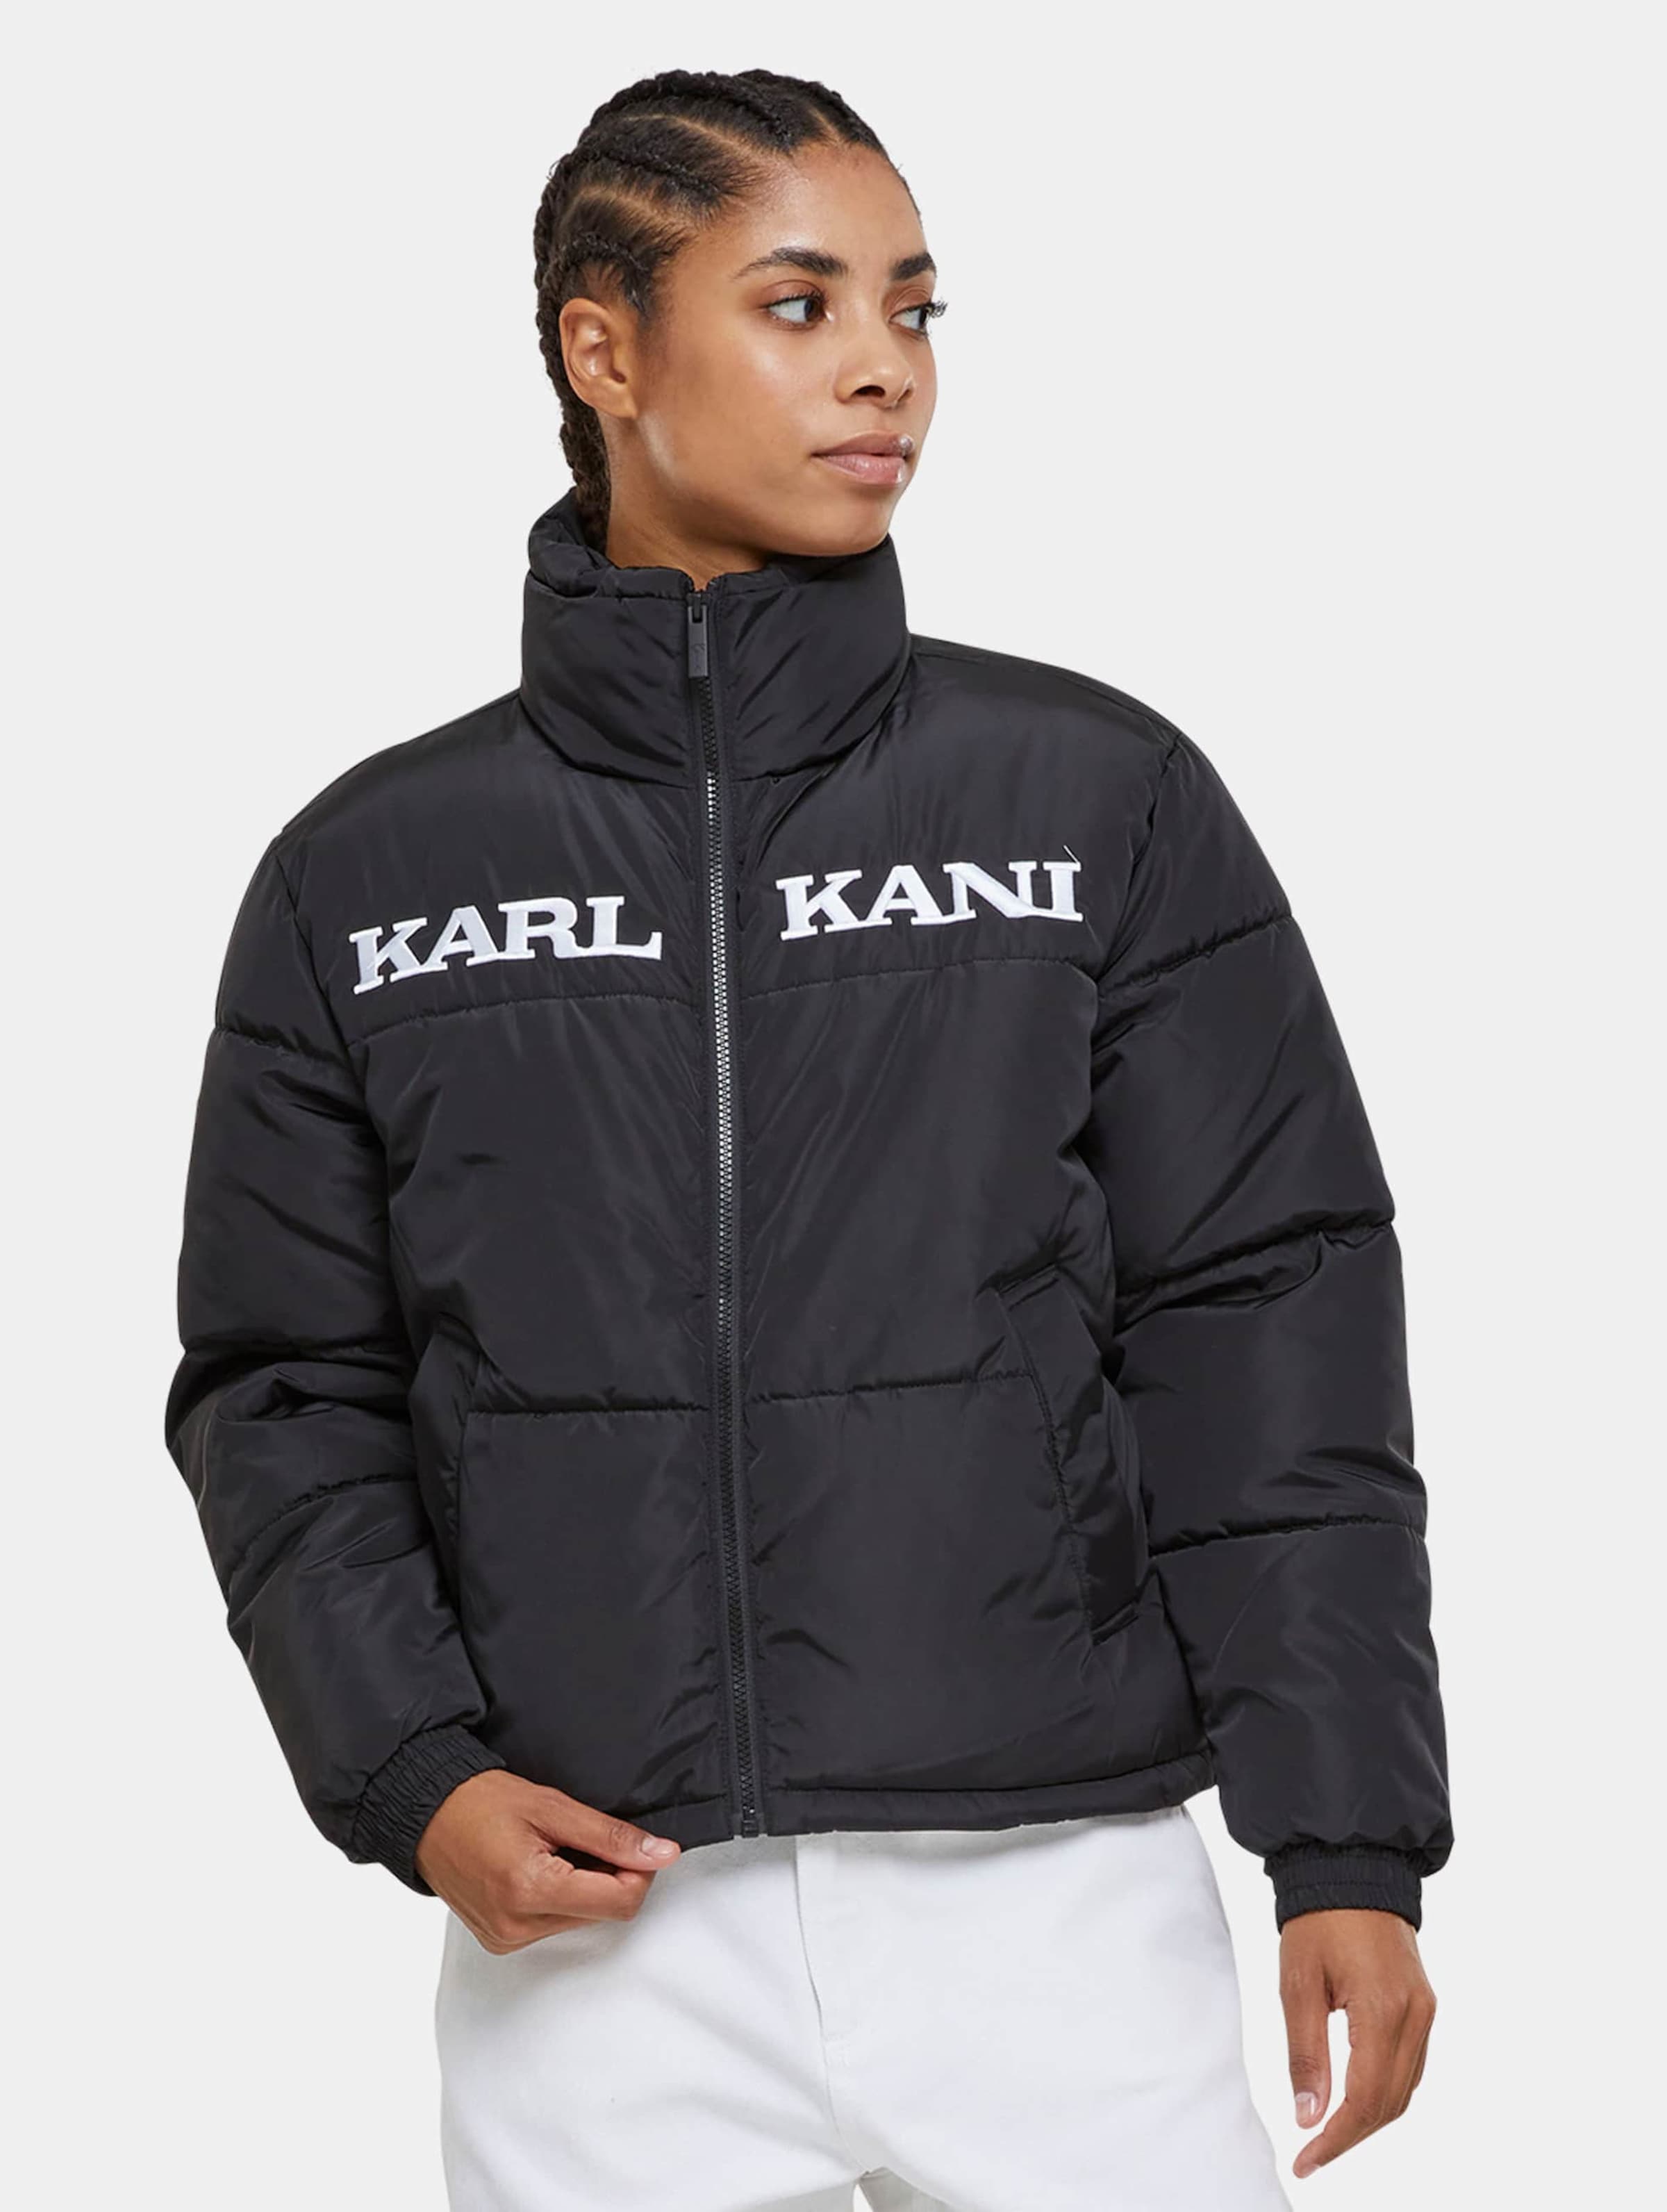 Karl Kani KW-JK012-001-01 KK Retro Essential Puffer Jacket Vrouwen op kleur zwart, Maat S